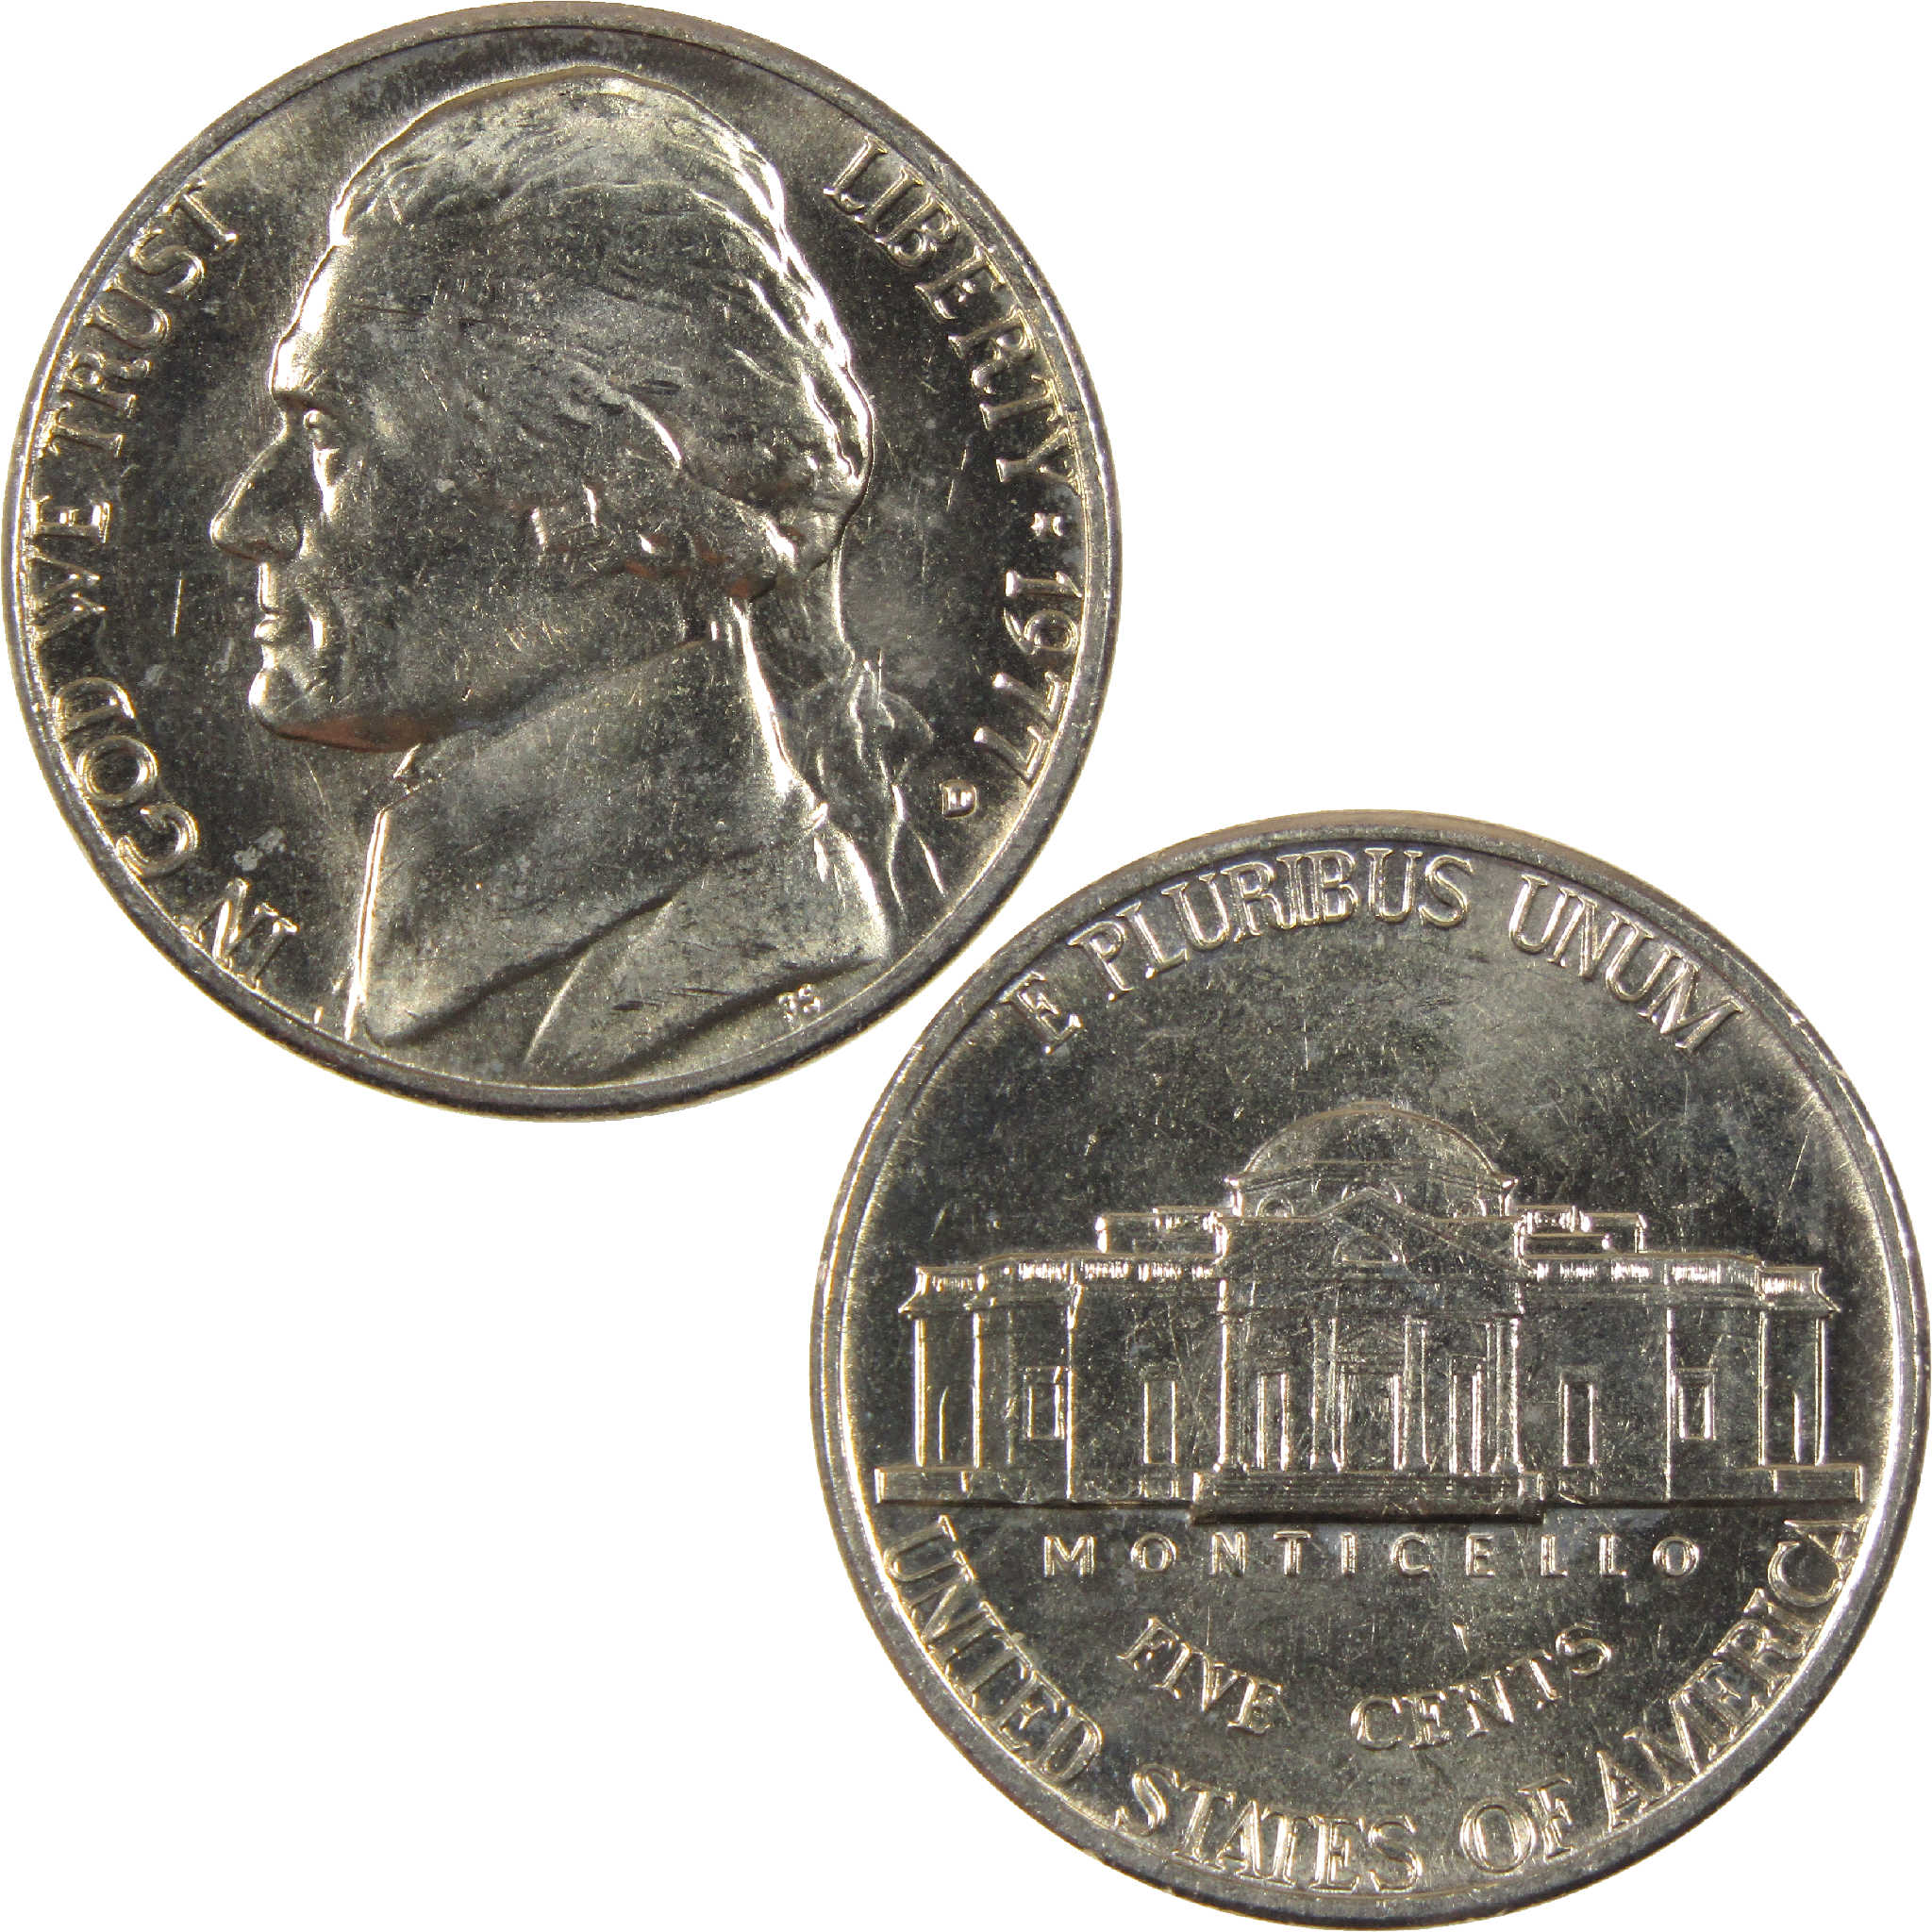 1977 D Jefferson Nickel Uncirculated 5c Coin